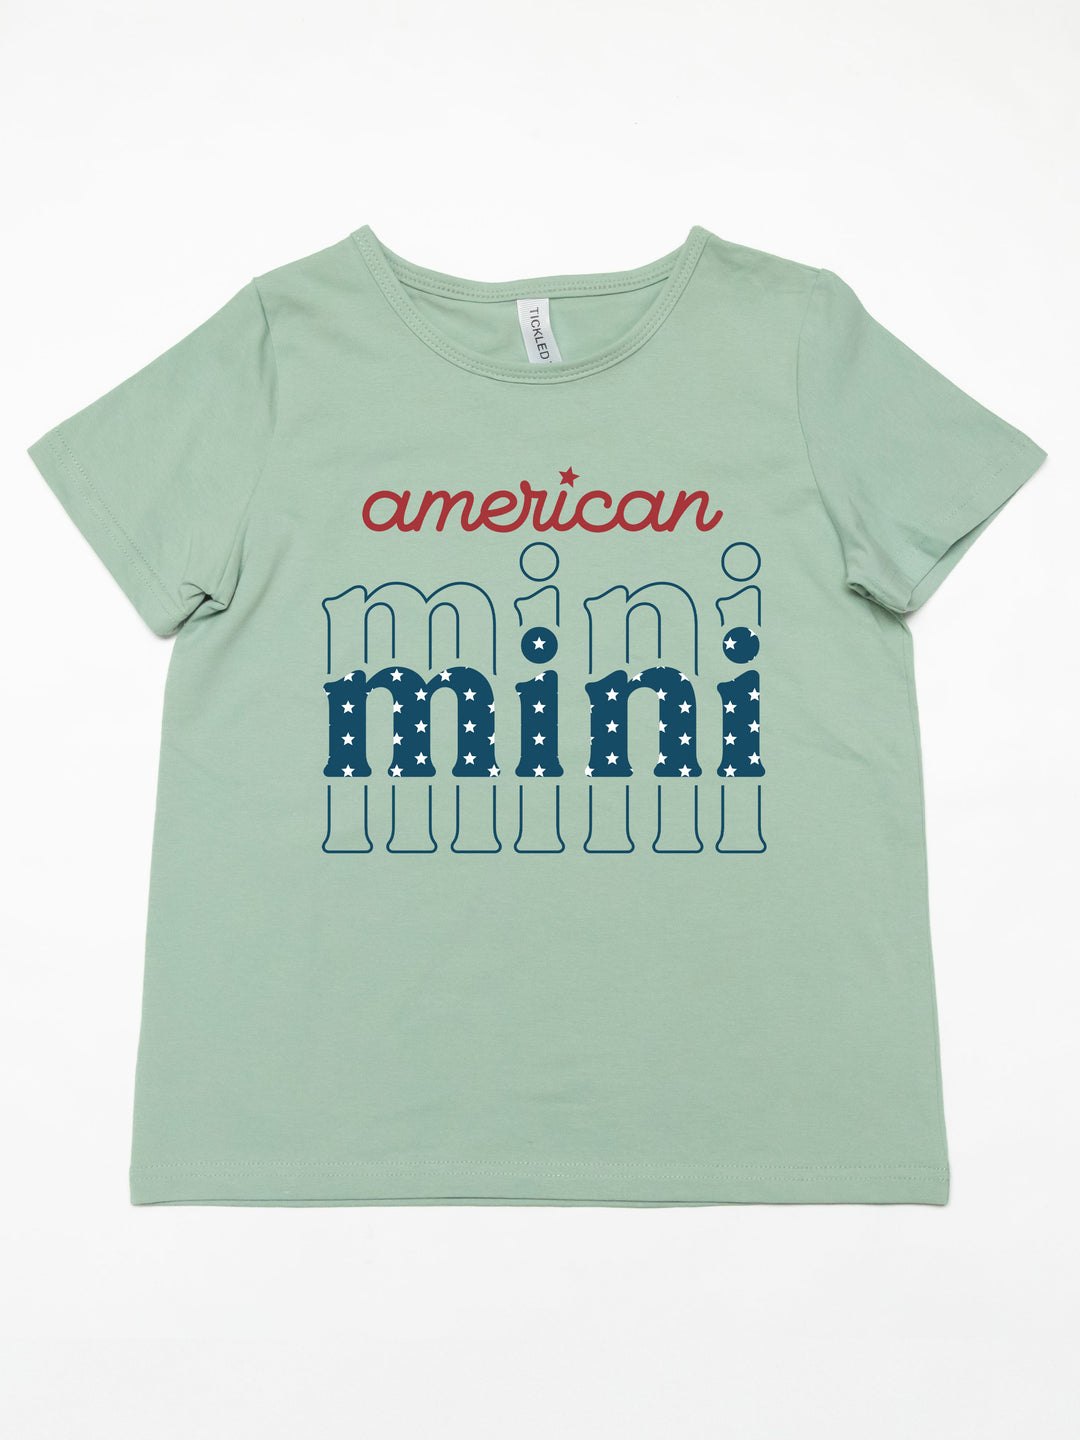 American Mini Kids Graphic Tee